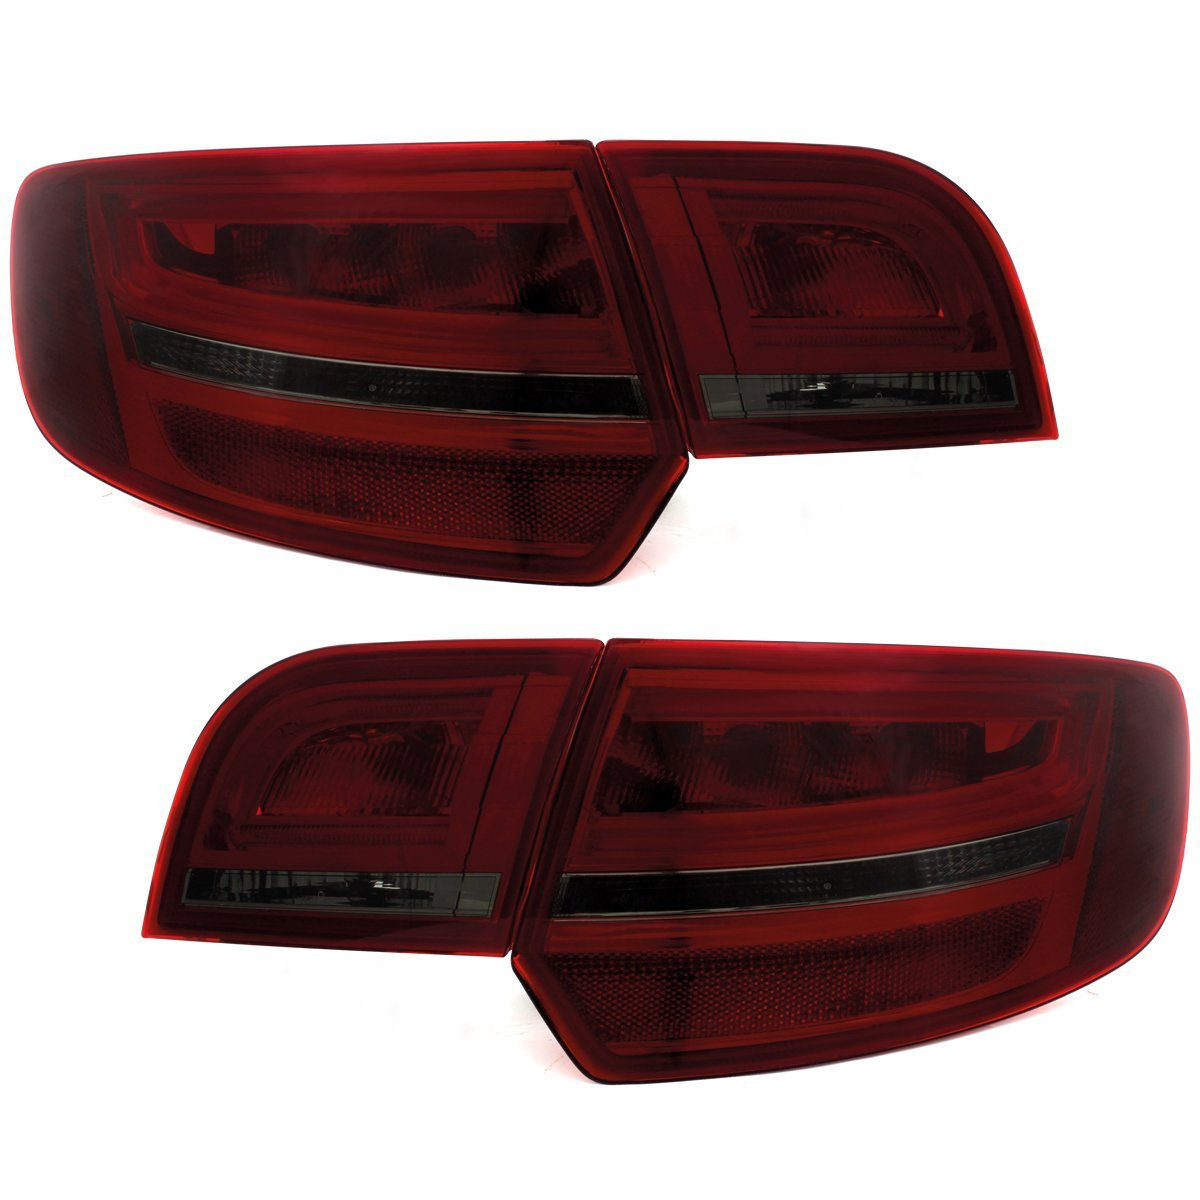 LED Rückleuchten für Audi A3 8P Sportback 04-08 rot/rauch DEPO